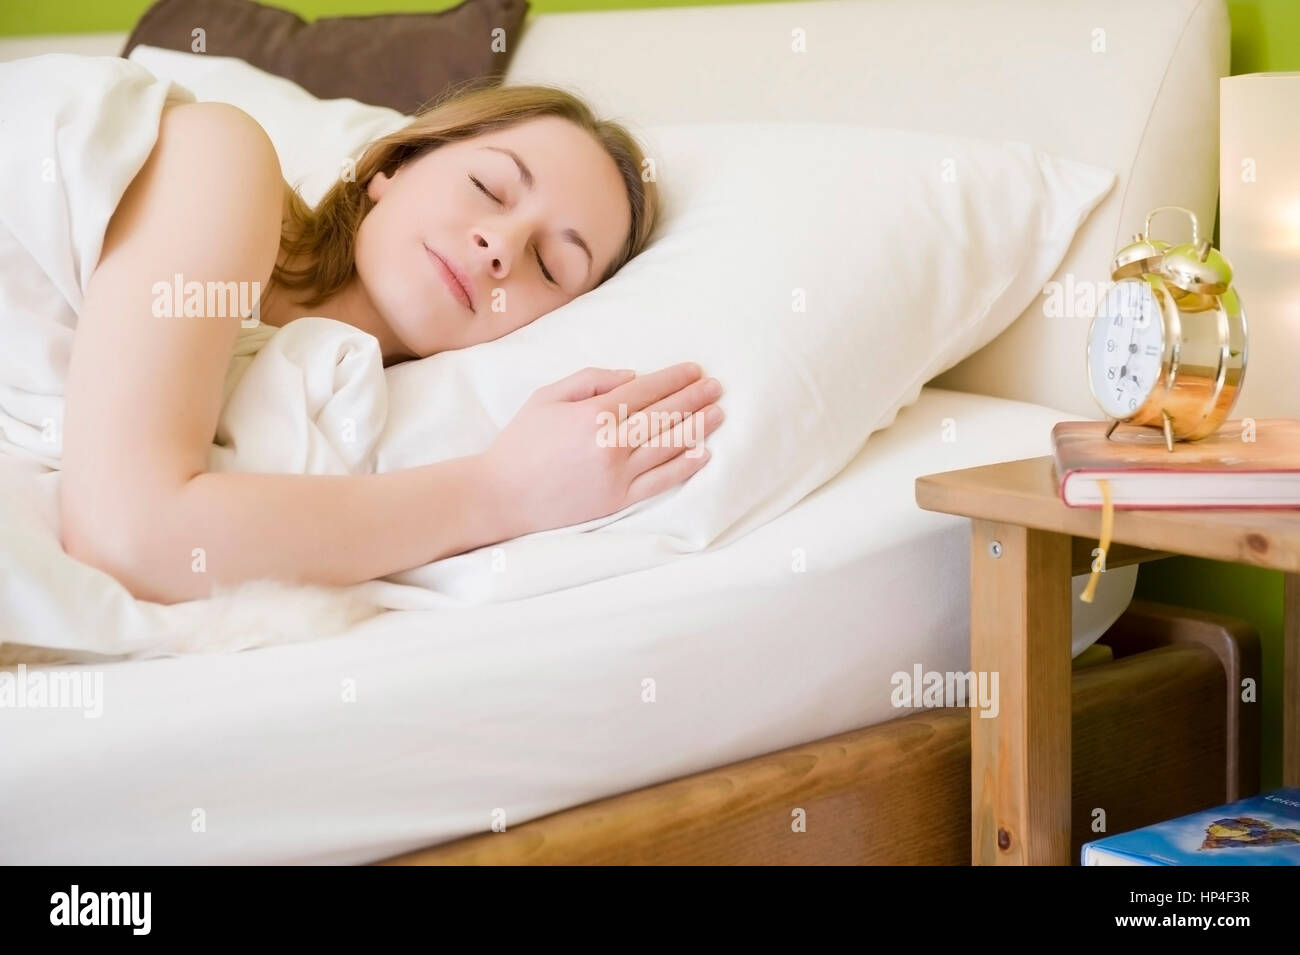 Model released , Frau, 25+, schlaeft - woman sleeping Stock Photo